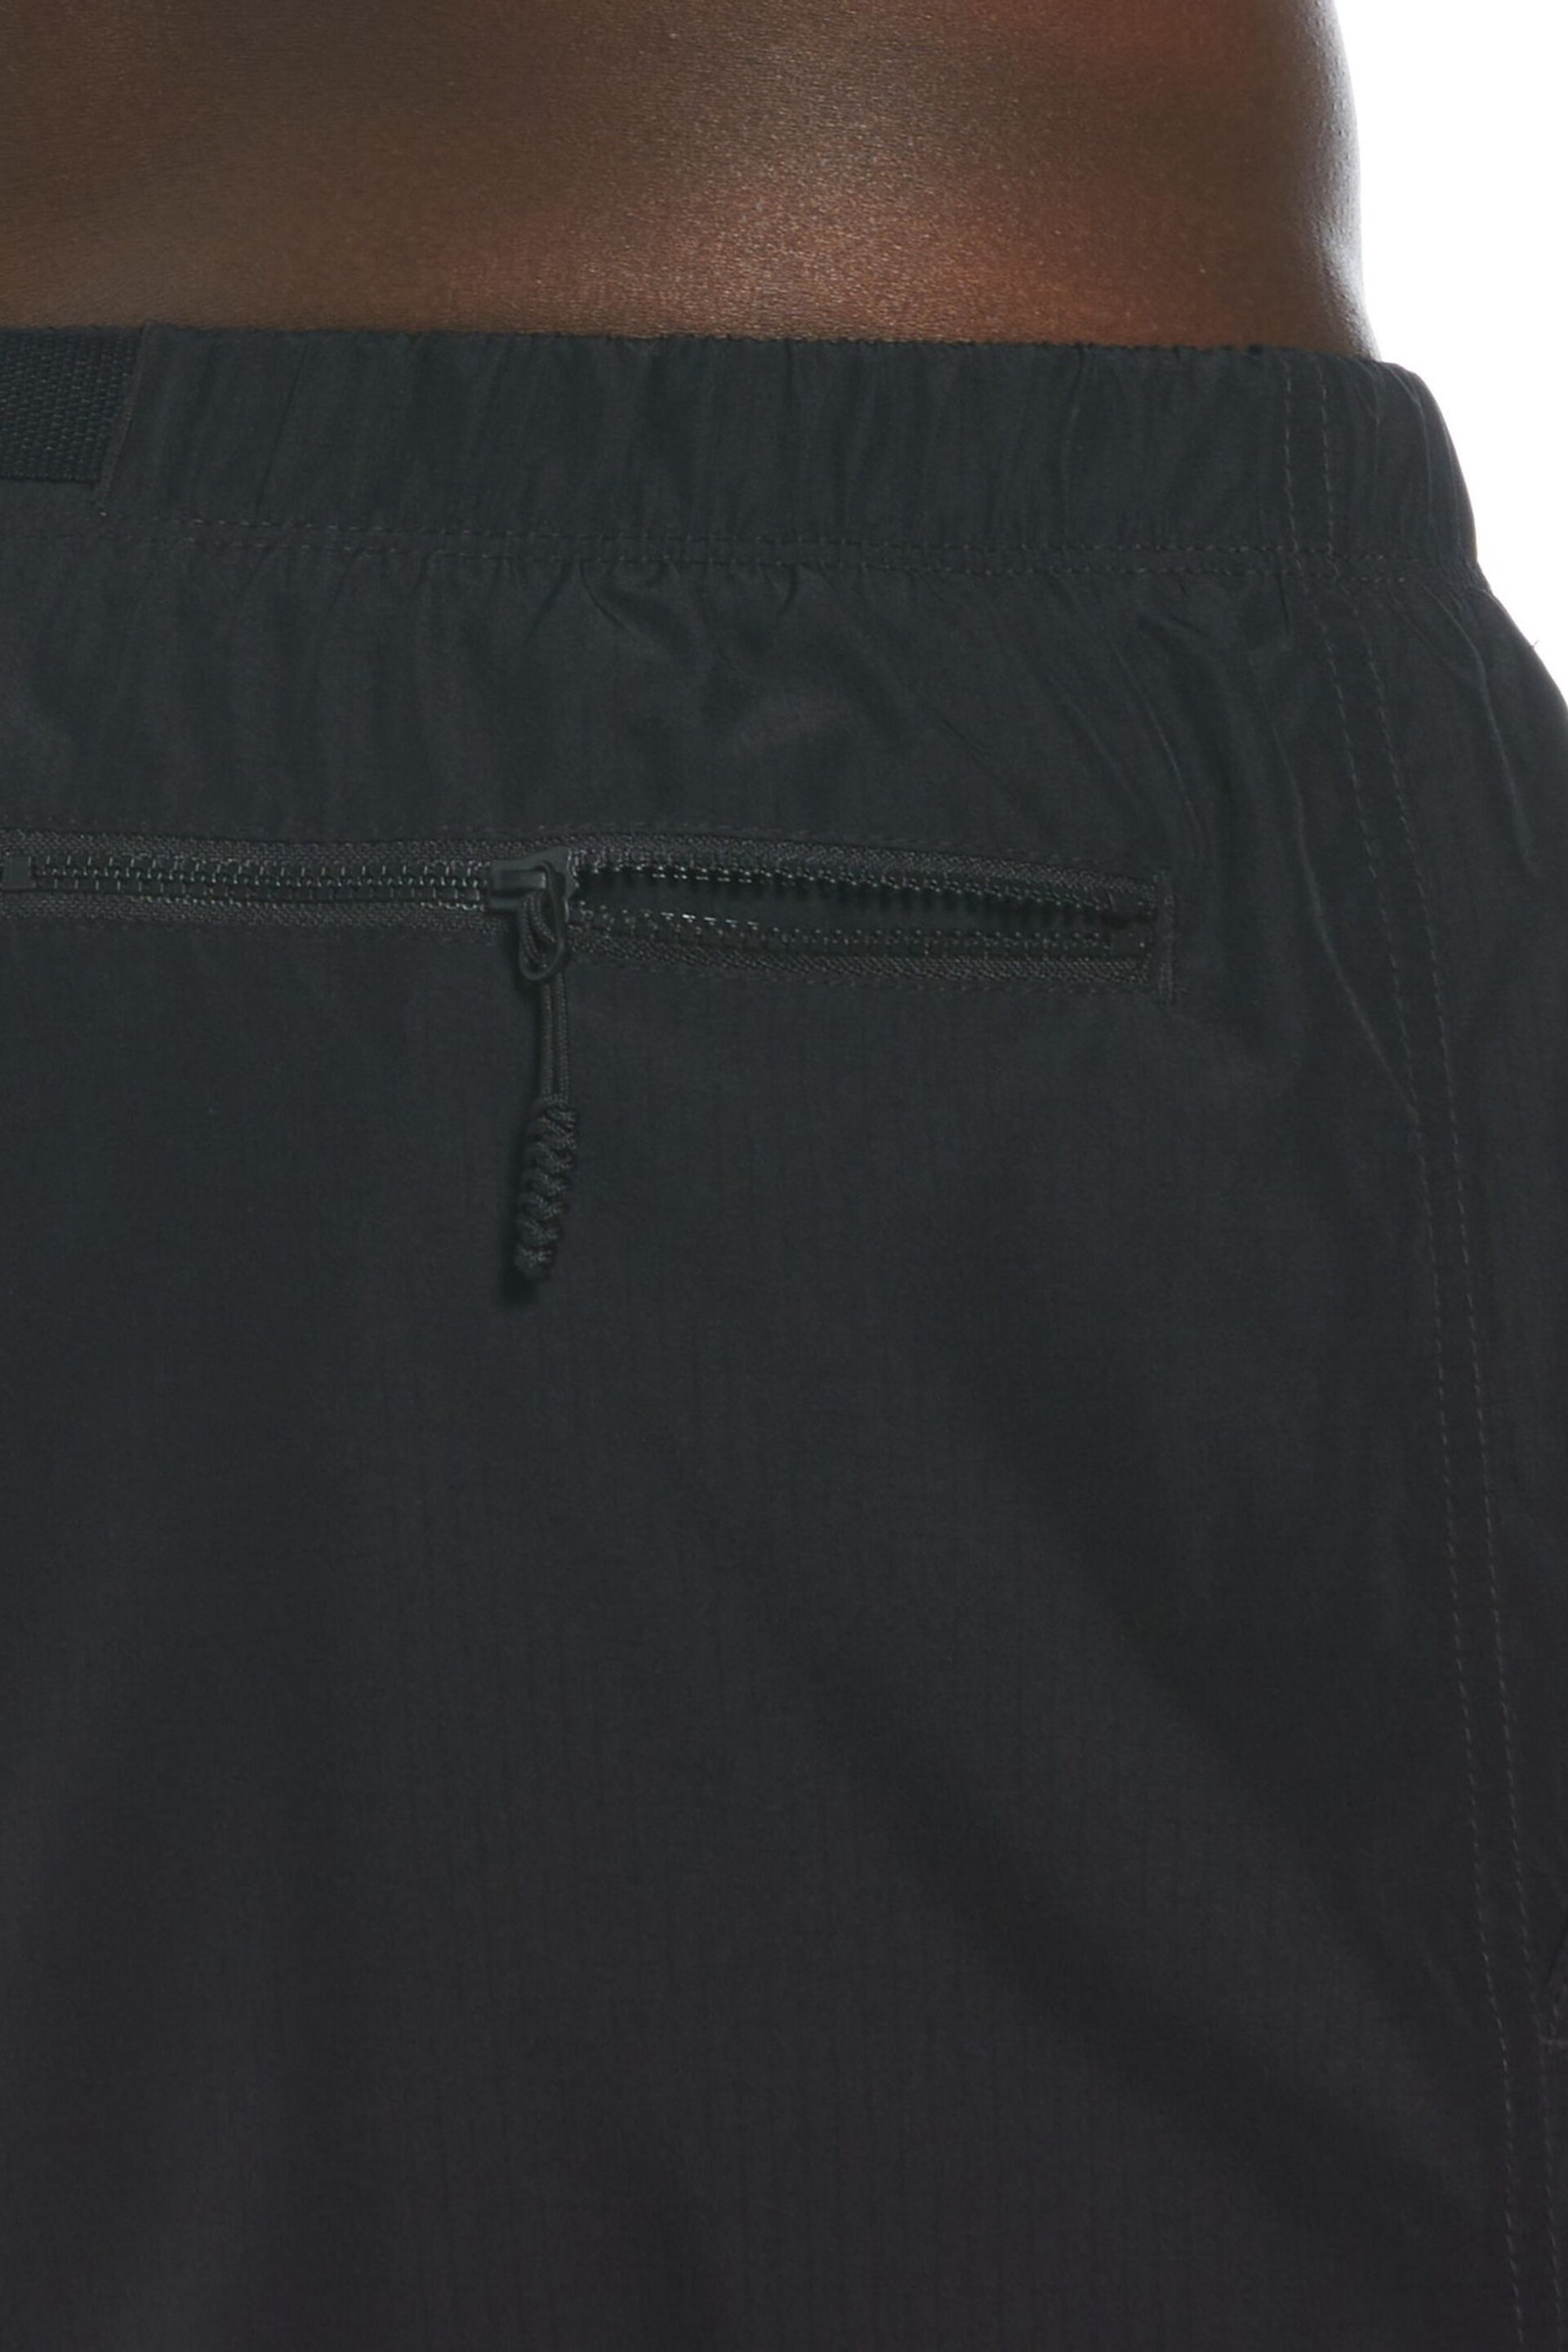 Nike Black 5 Inch Essential Volley Cargo Swim Shorts - Image 4 of 9